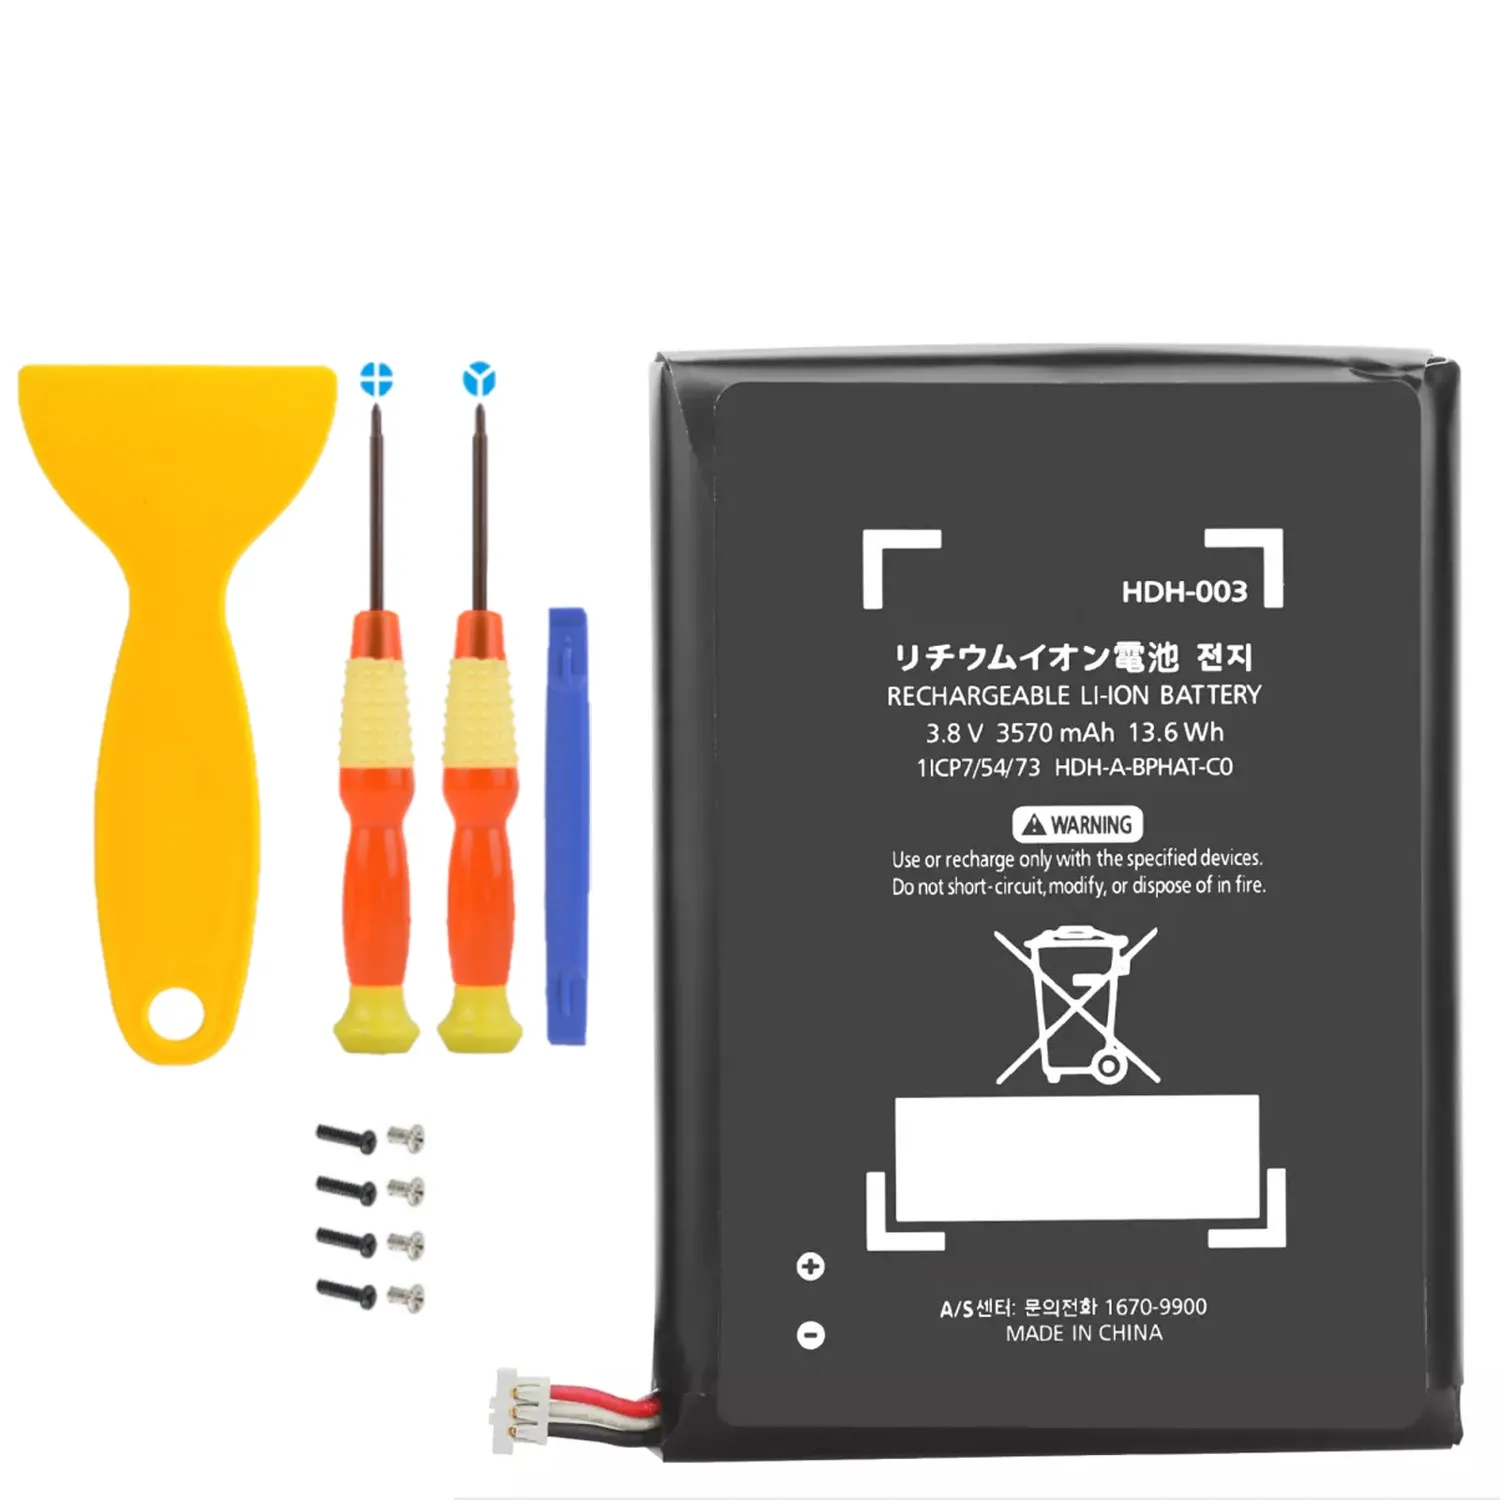 

3570mAh HDH-003 HDH 003 Battery for Nintendo HDH-001 HDH-002 Switch Lite with DIY Repair Tool Kit